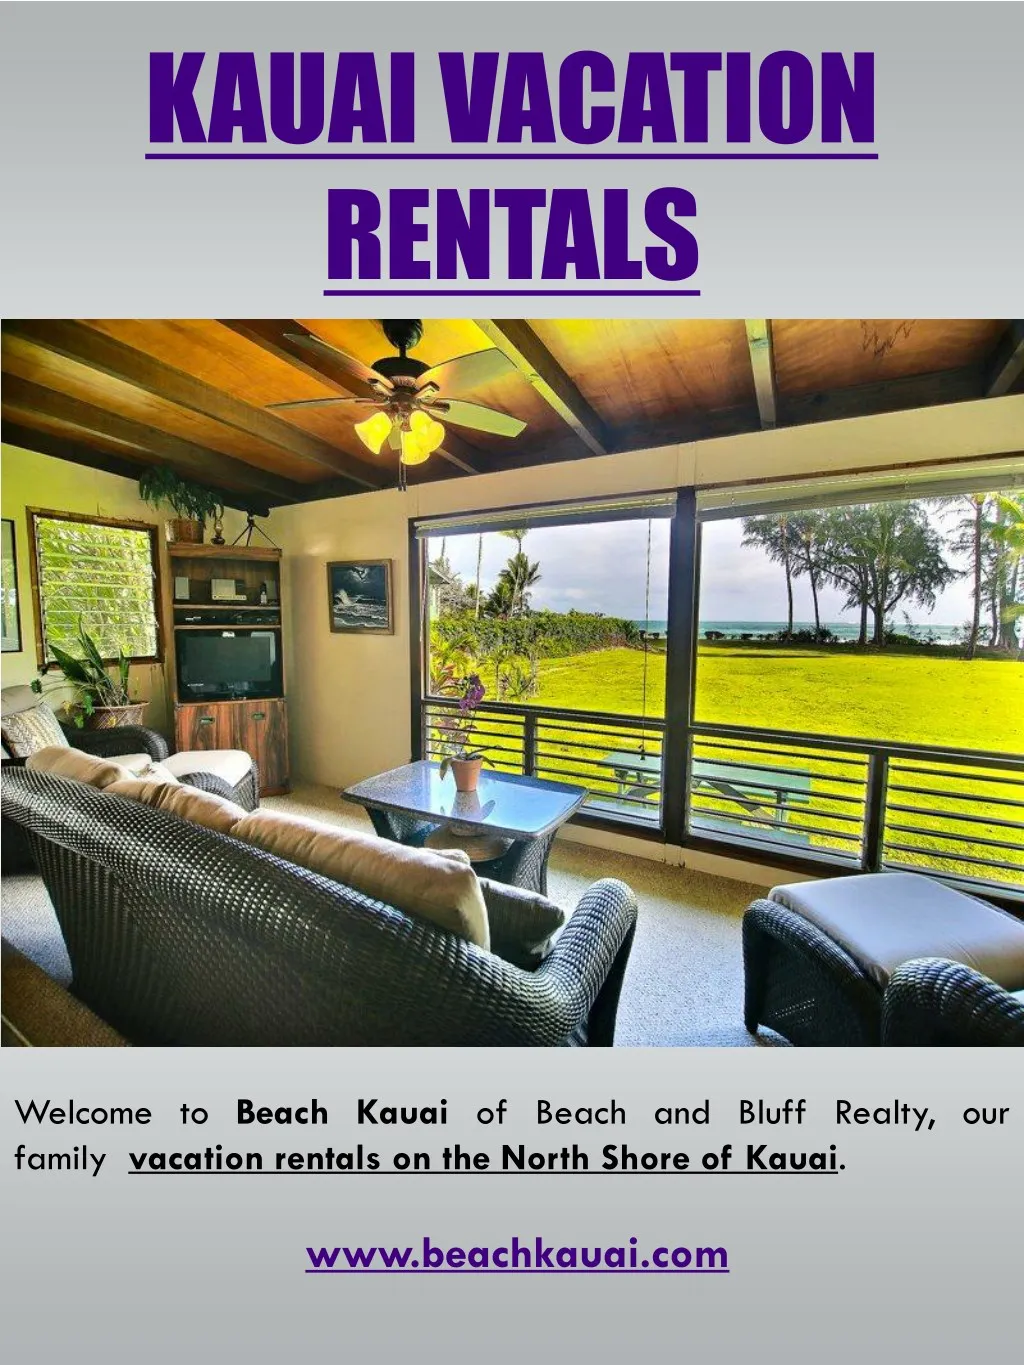 kauai vacation rentals